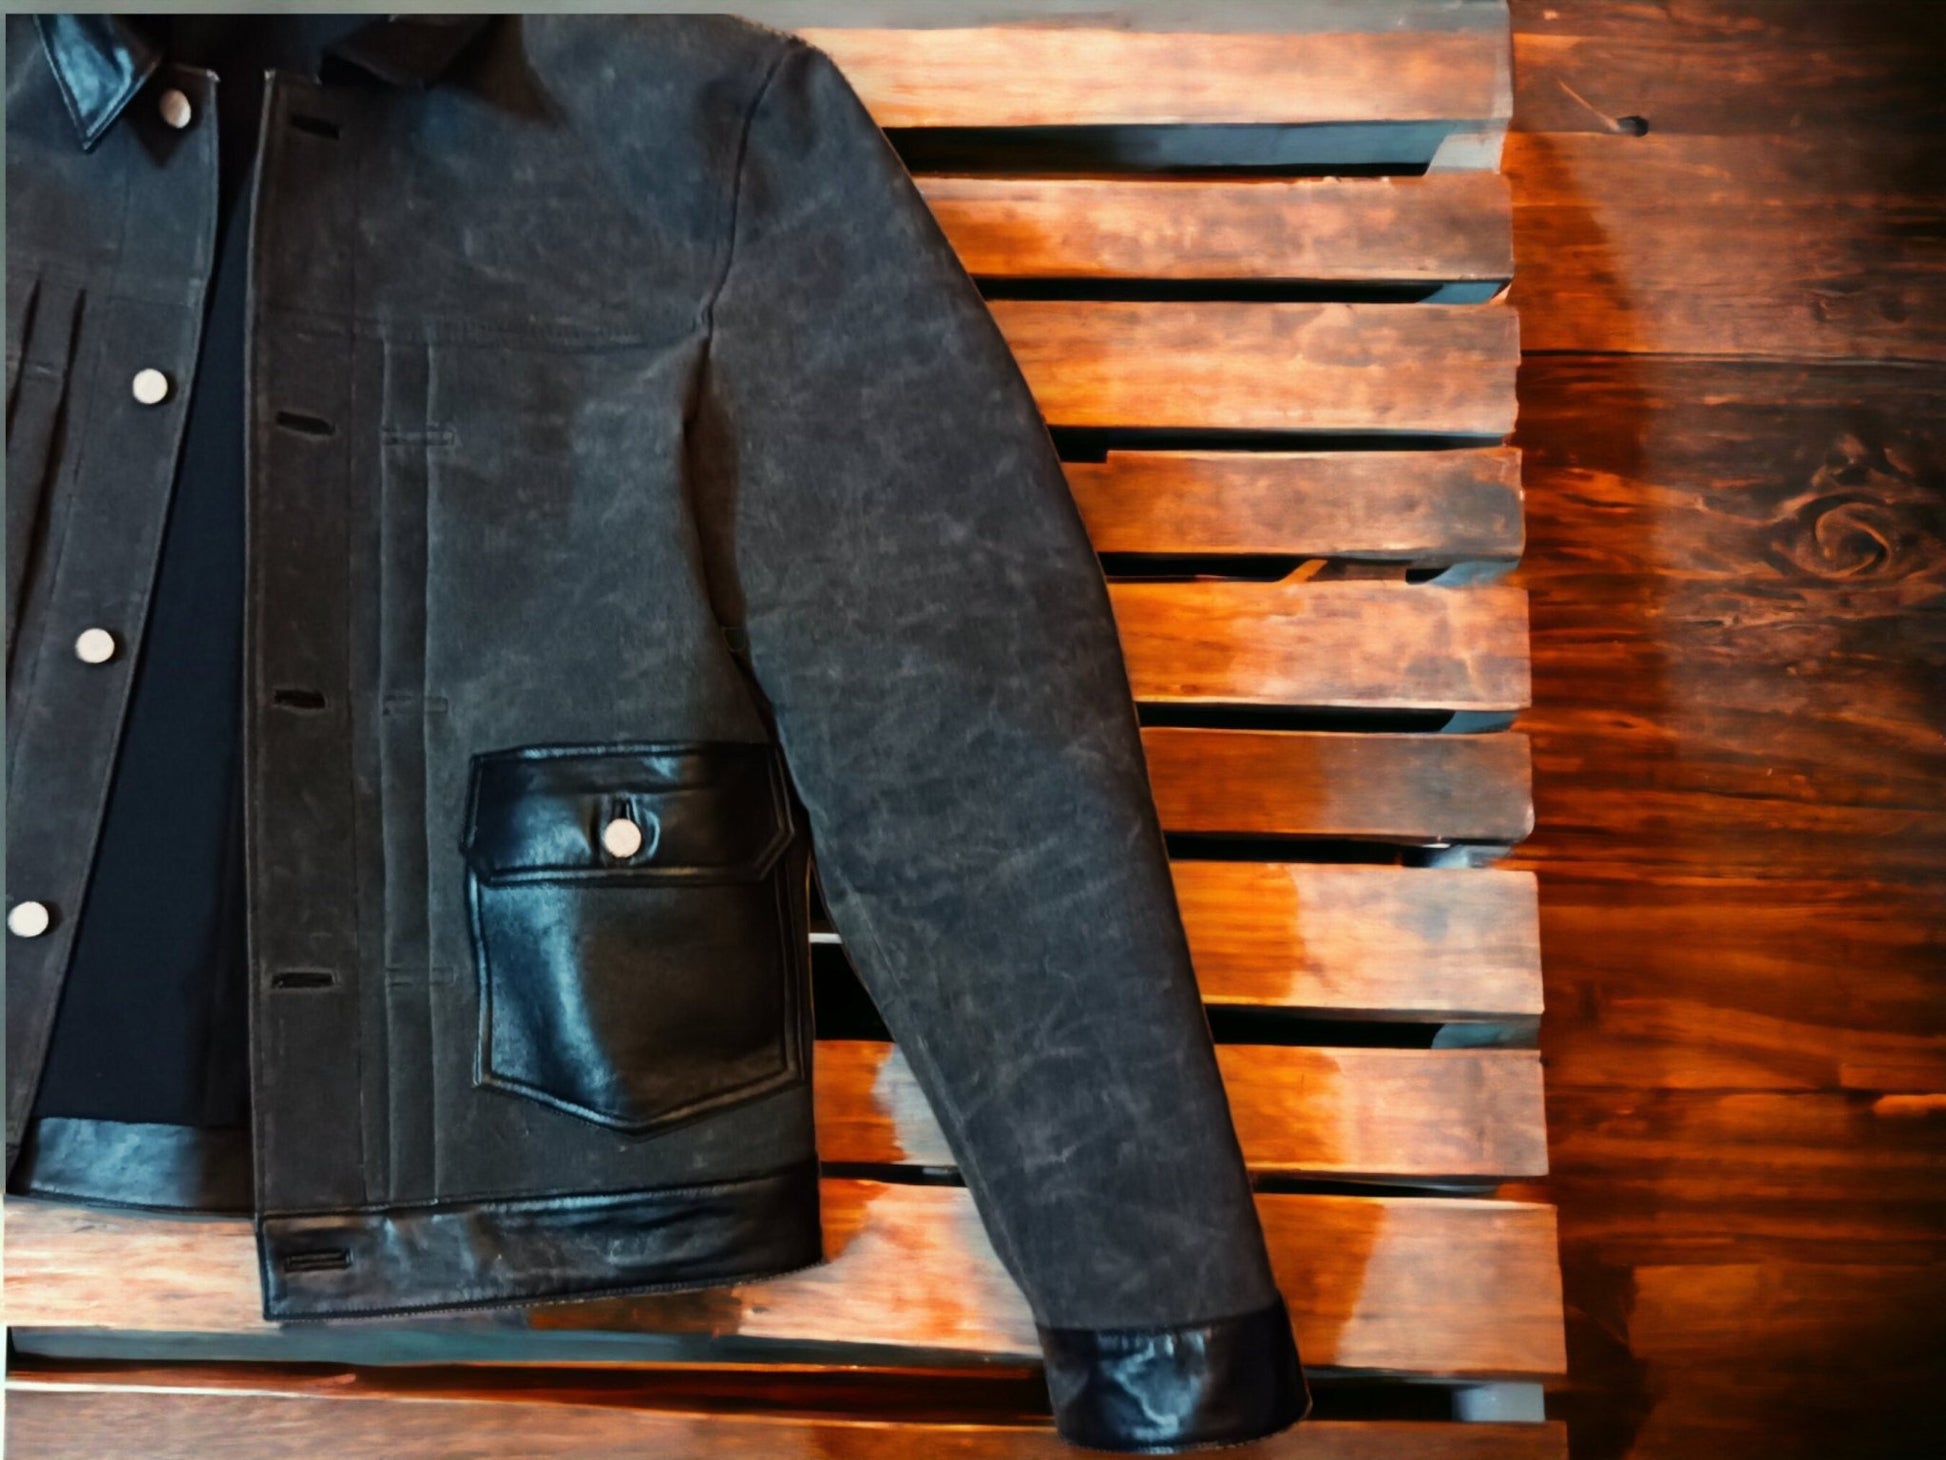 Black Leather Waxed Canvas Jacket | Biker Jacket | Handmade Jacket  | Tailored to Your Size | Black | Green |  Leather Jacket |  99percenthandmade   